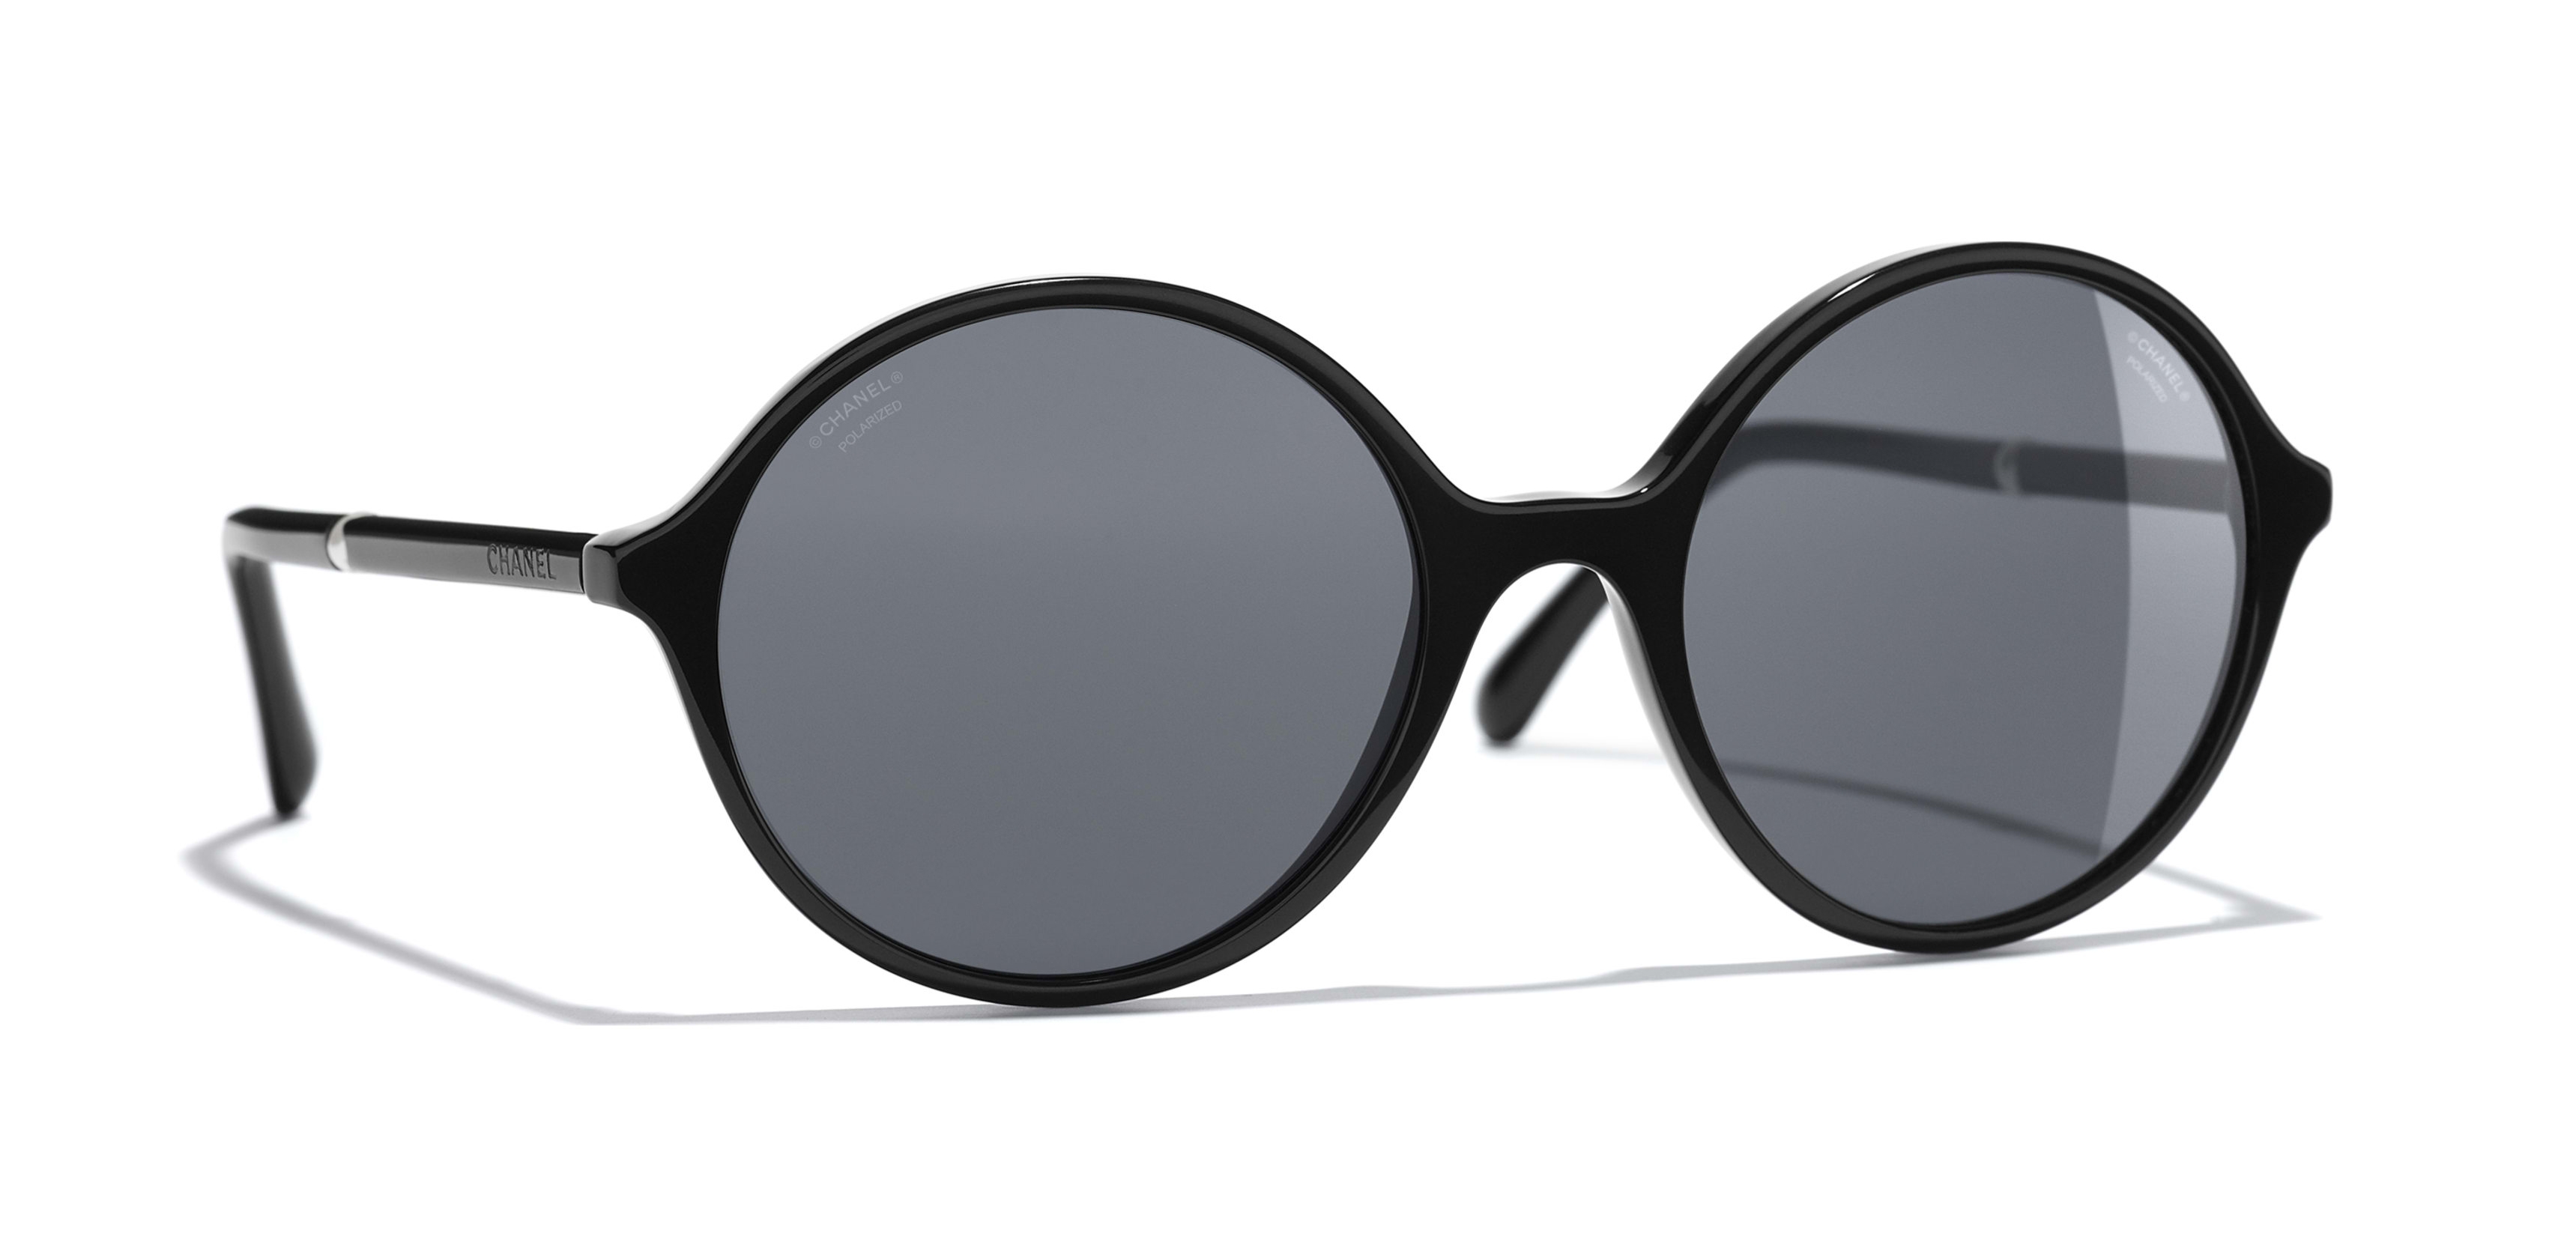 Chanel - Round Sunglasses - Black Transparent - Chanel Eyewear - Avvenice